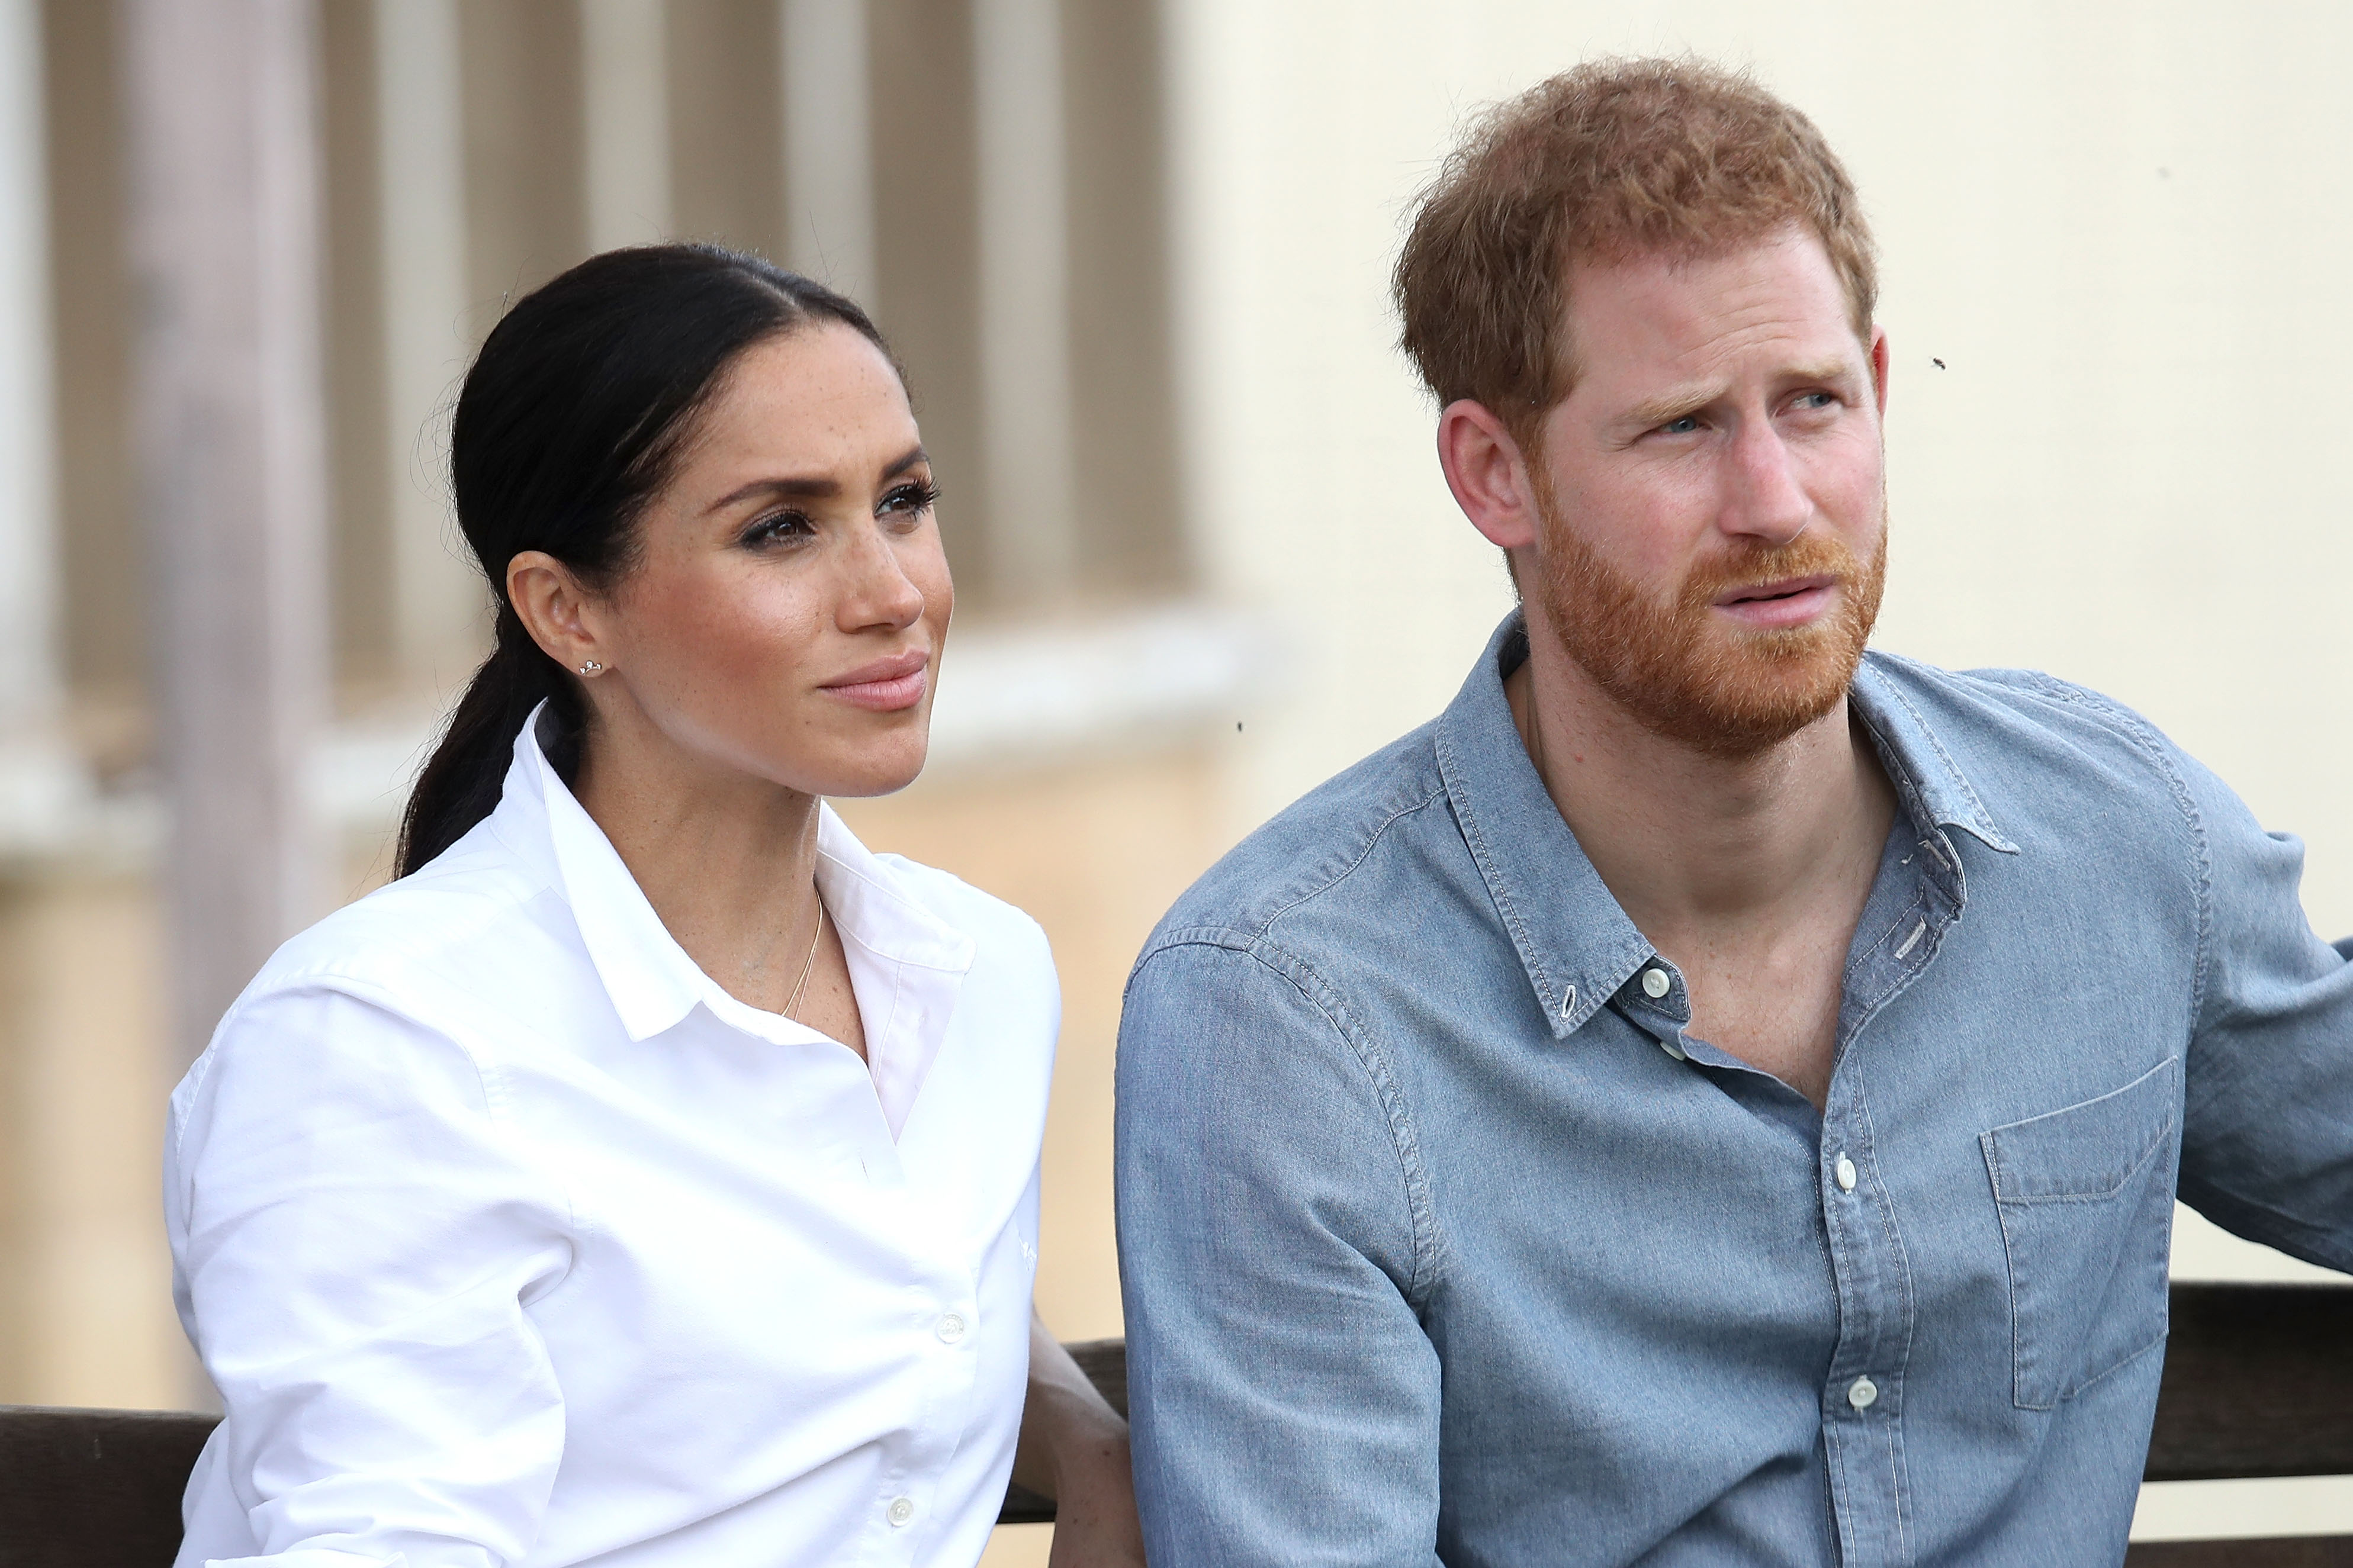 Meghan Markle wears a white shirt as she sits next to Prince Harry wearing a blue shirt